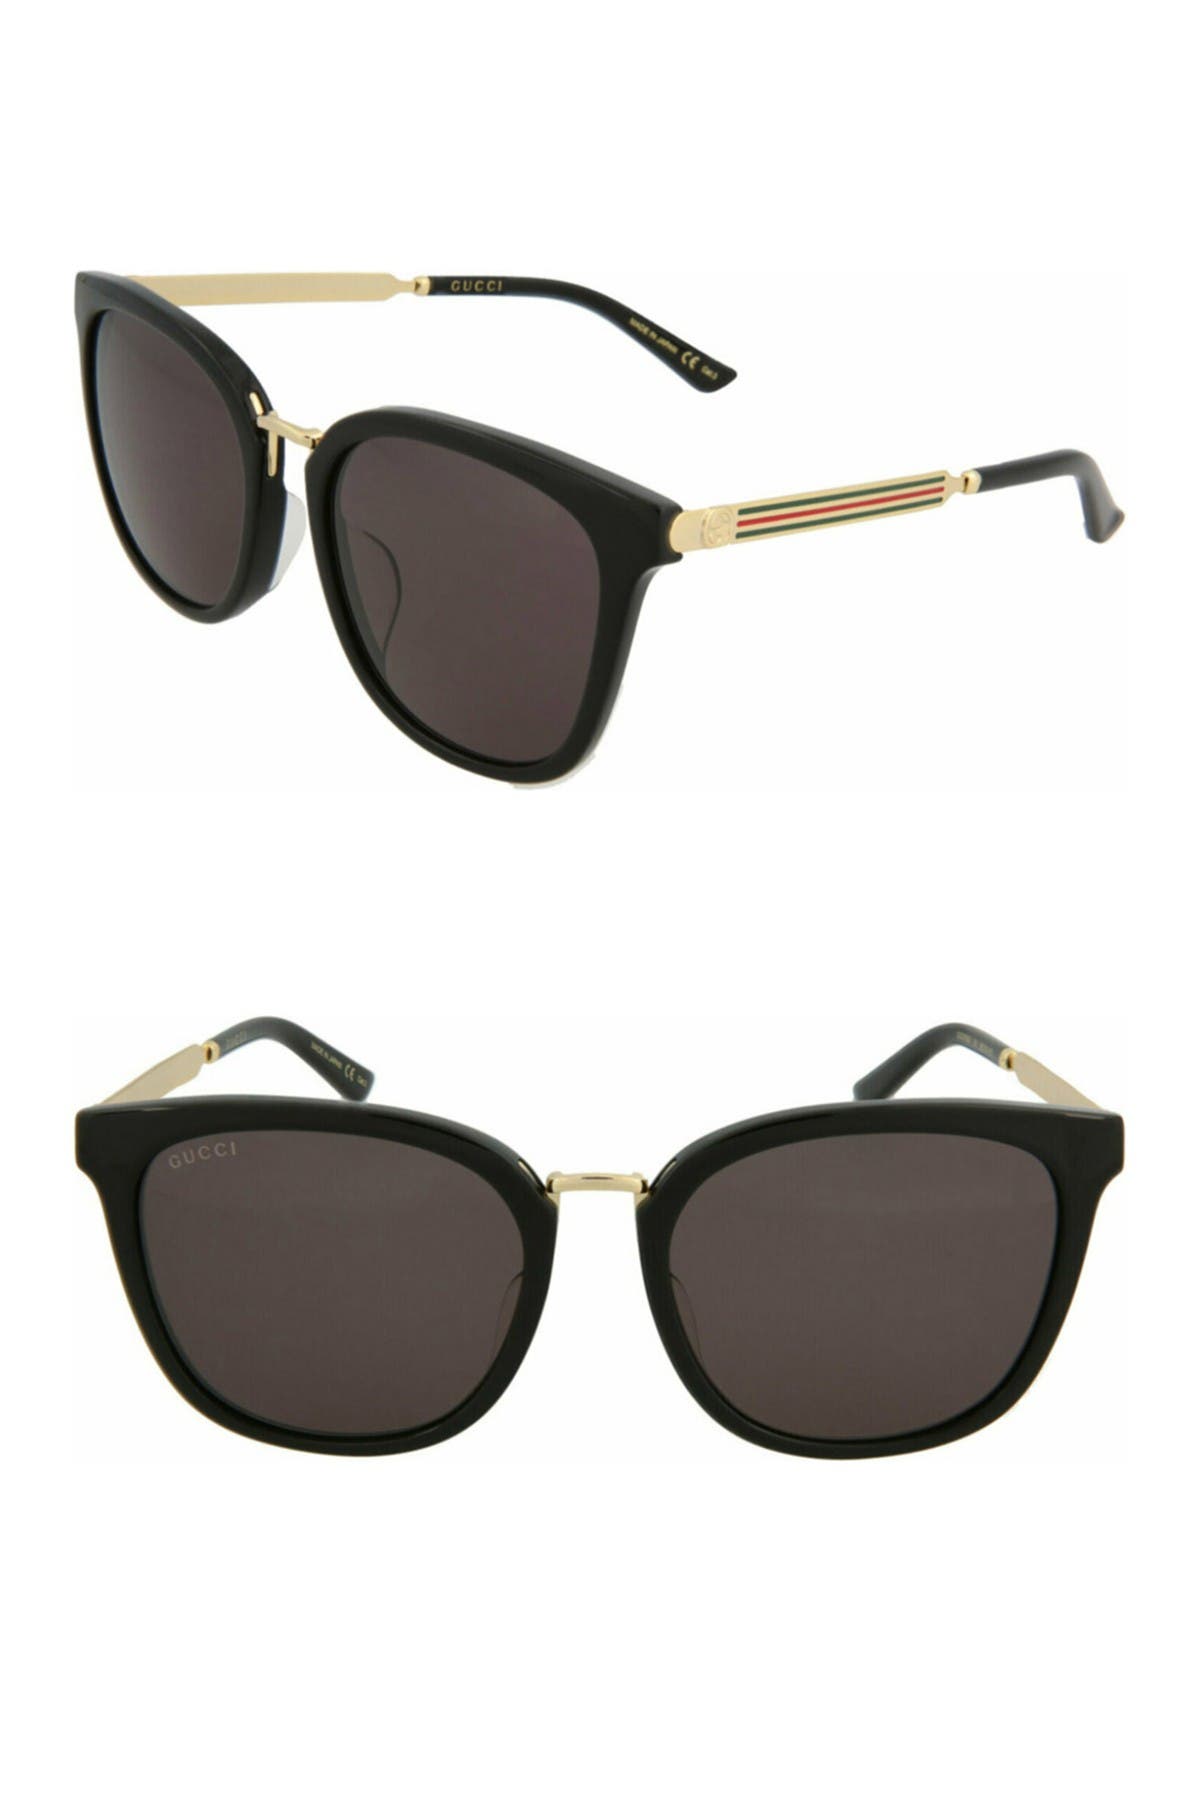 Gucci 56mm Fashion Rectangle Sunglasses In Black Gold Grey